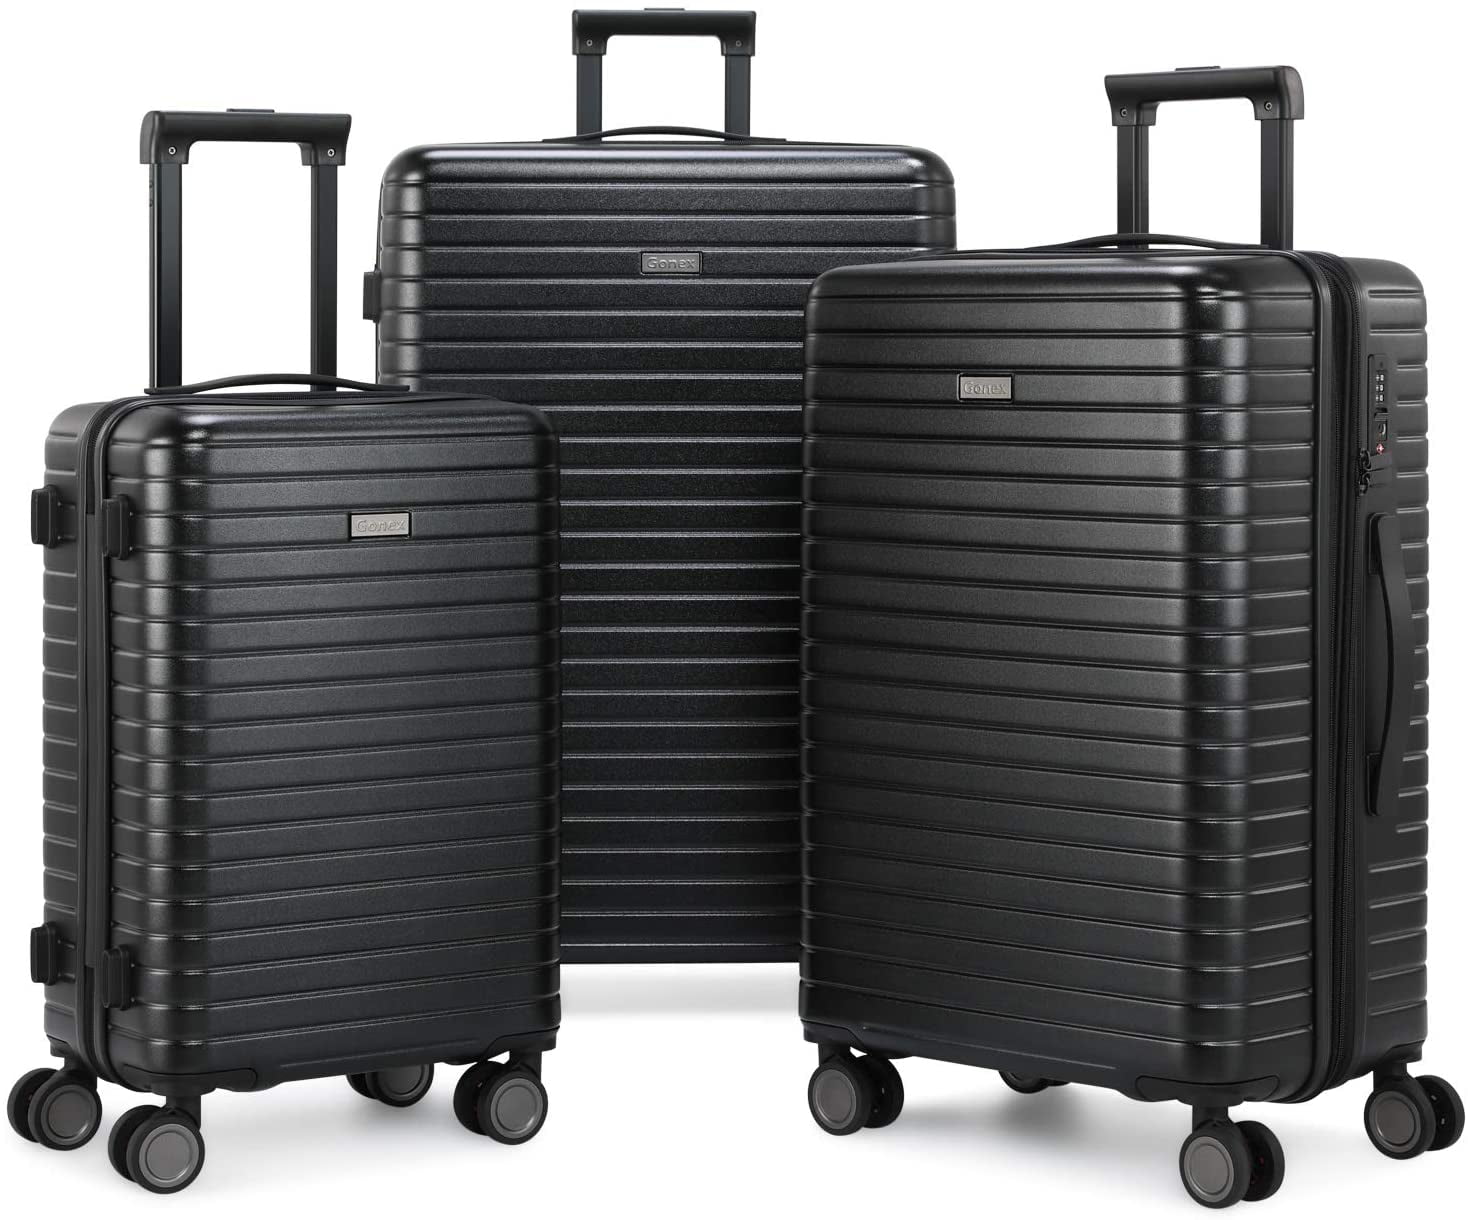 Walmart Hard Case Luggage on Sale, 52% OFF | www.ingeniovirtual.com